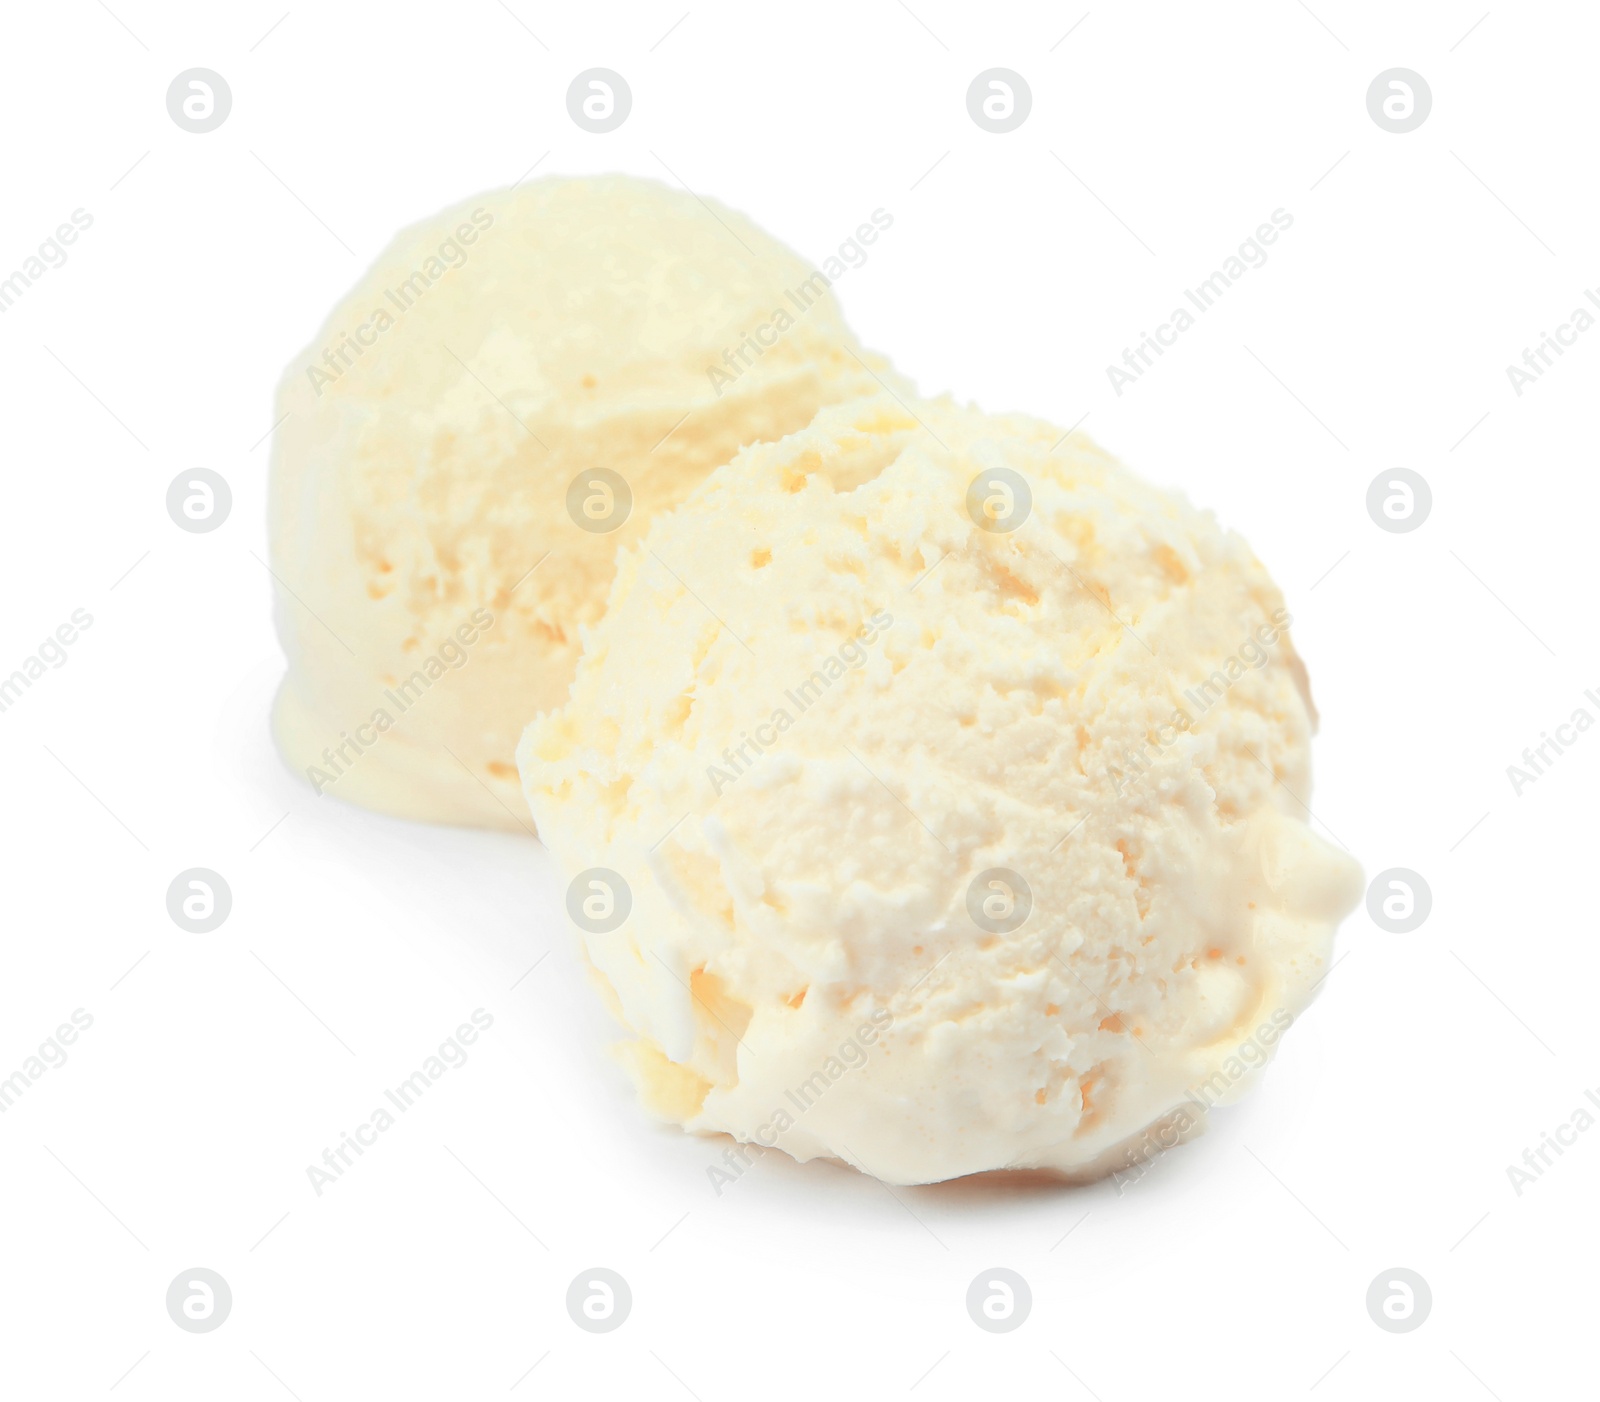 Photo of Balls pf delicious vanilla ice cream on white background